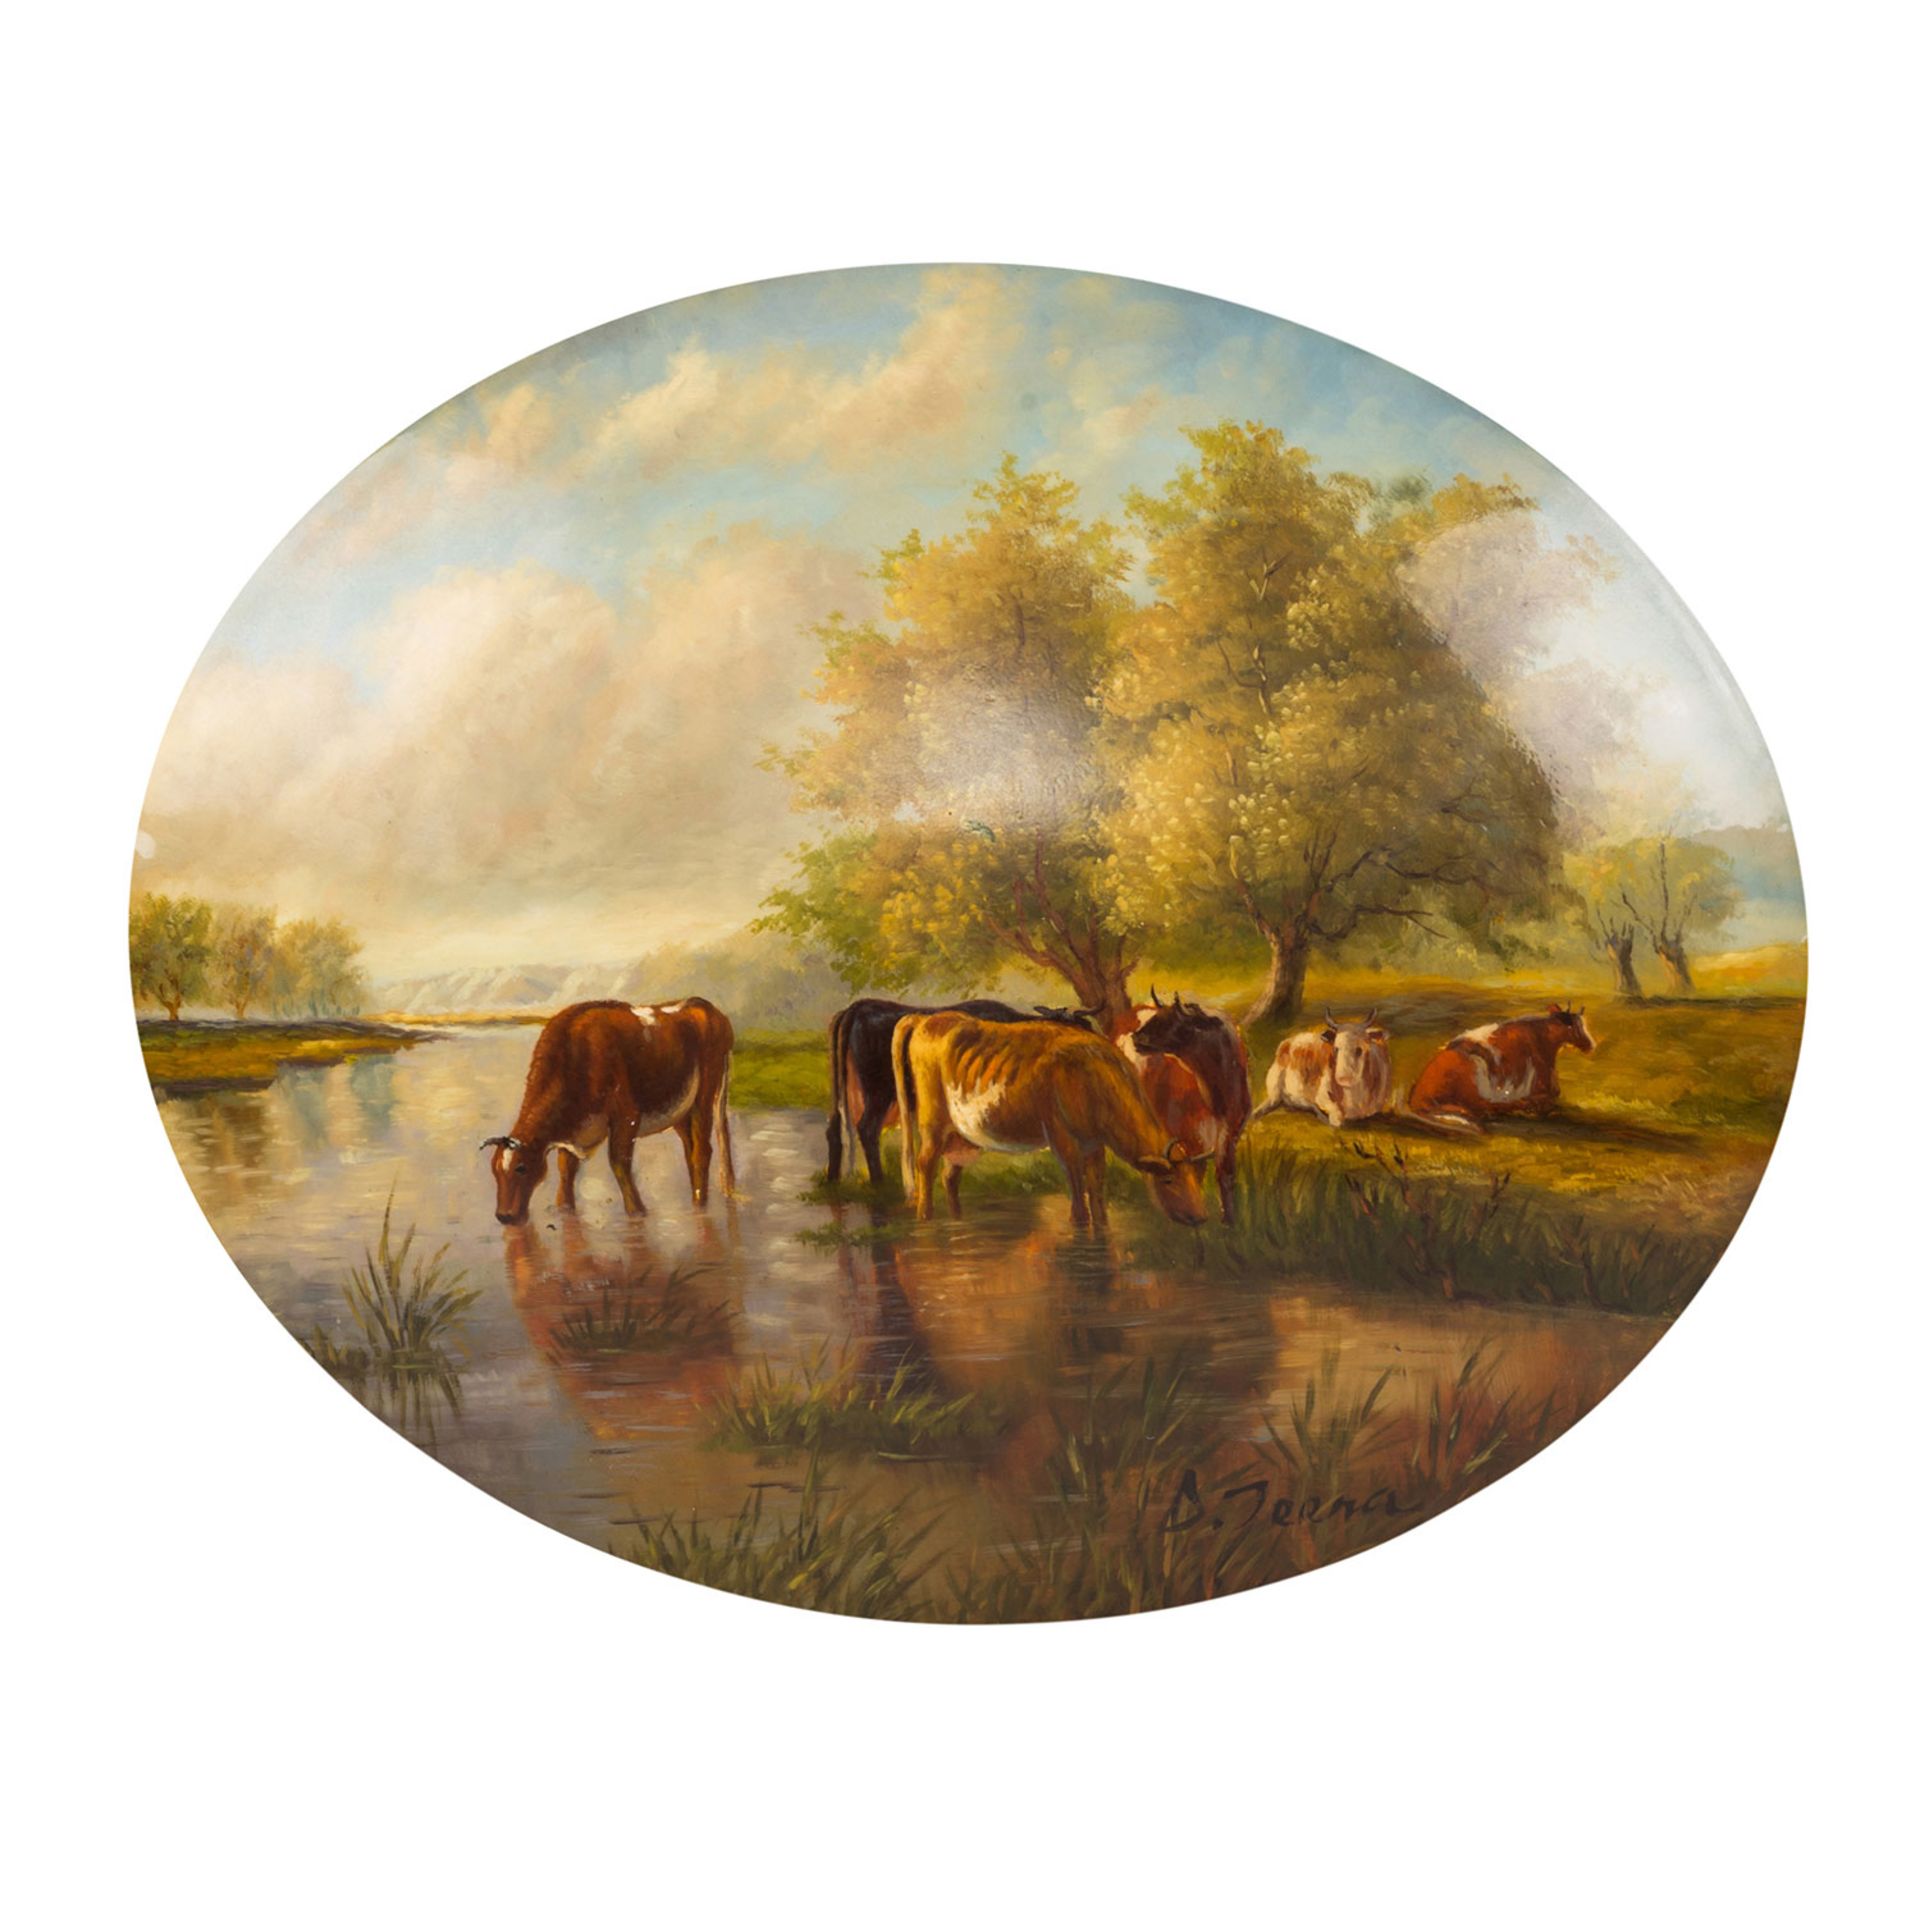 JERNA, D. (Maler 20. Jh.), "Kühe am Flussufer", in altmeisterlicher Manier, u.re. sign., Öl auf